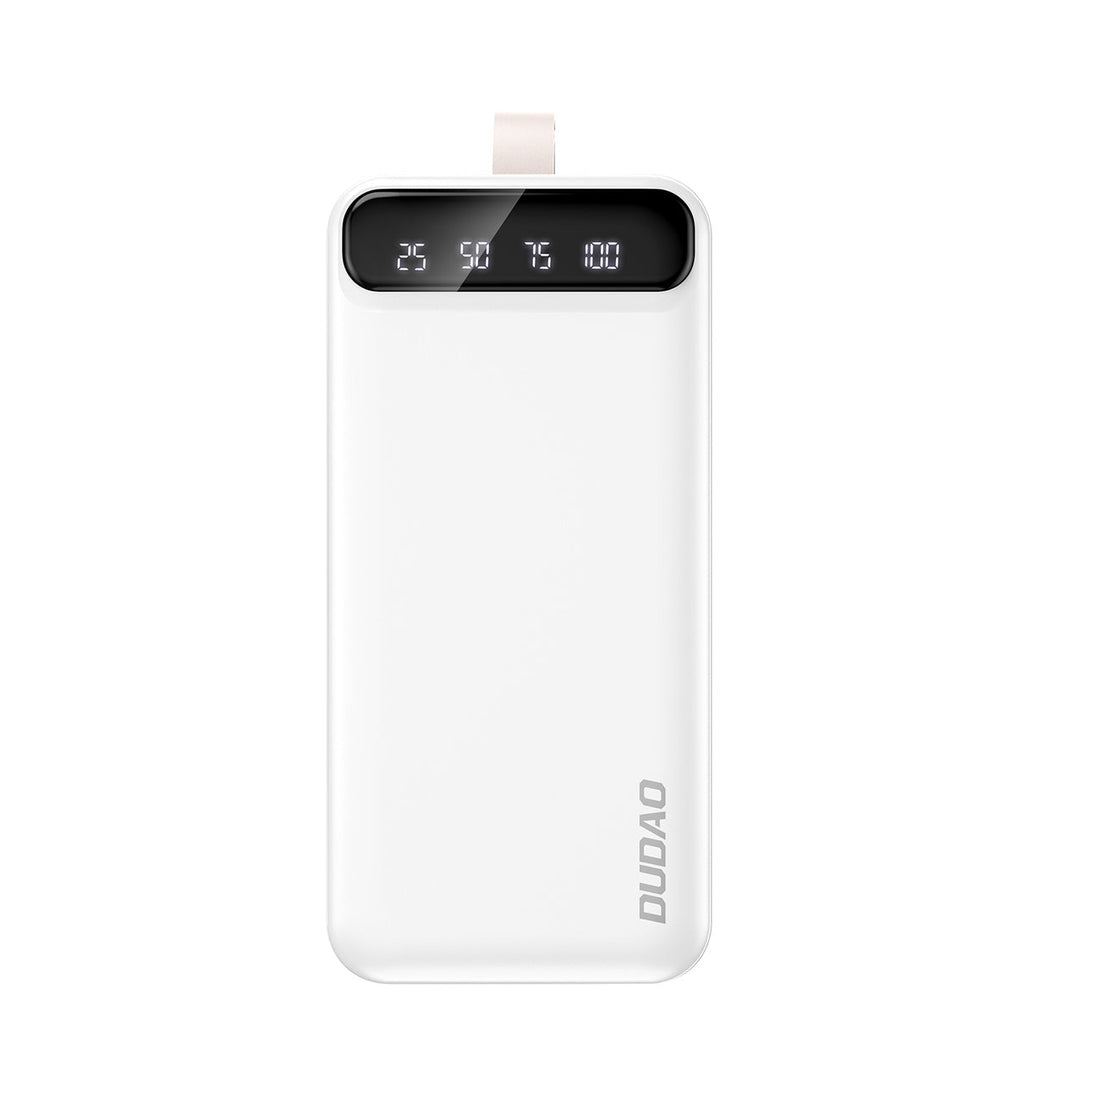 Baterie Externa Dudao K8s + 30000 mAh - 2 x USB USB-C Lanterna LED v2.0 - White - K8s + white2023 - 6973687240776 - 1